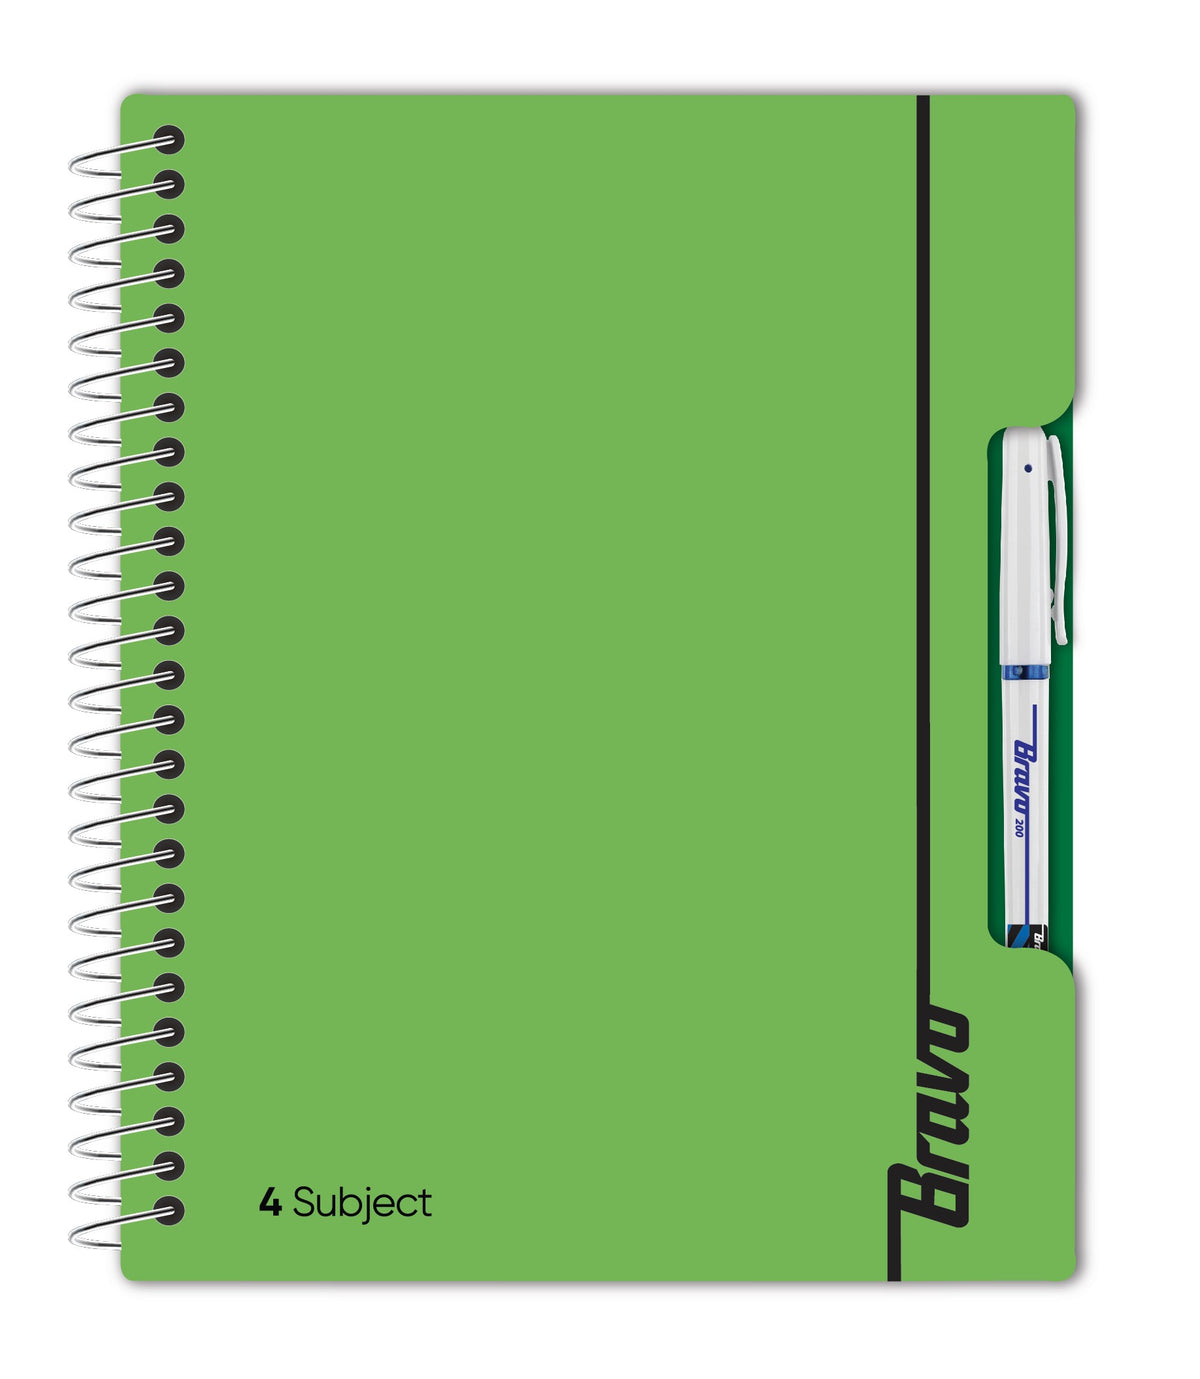 New Bravo NoteBook 4 Subject  - Green